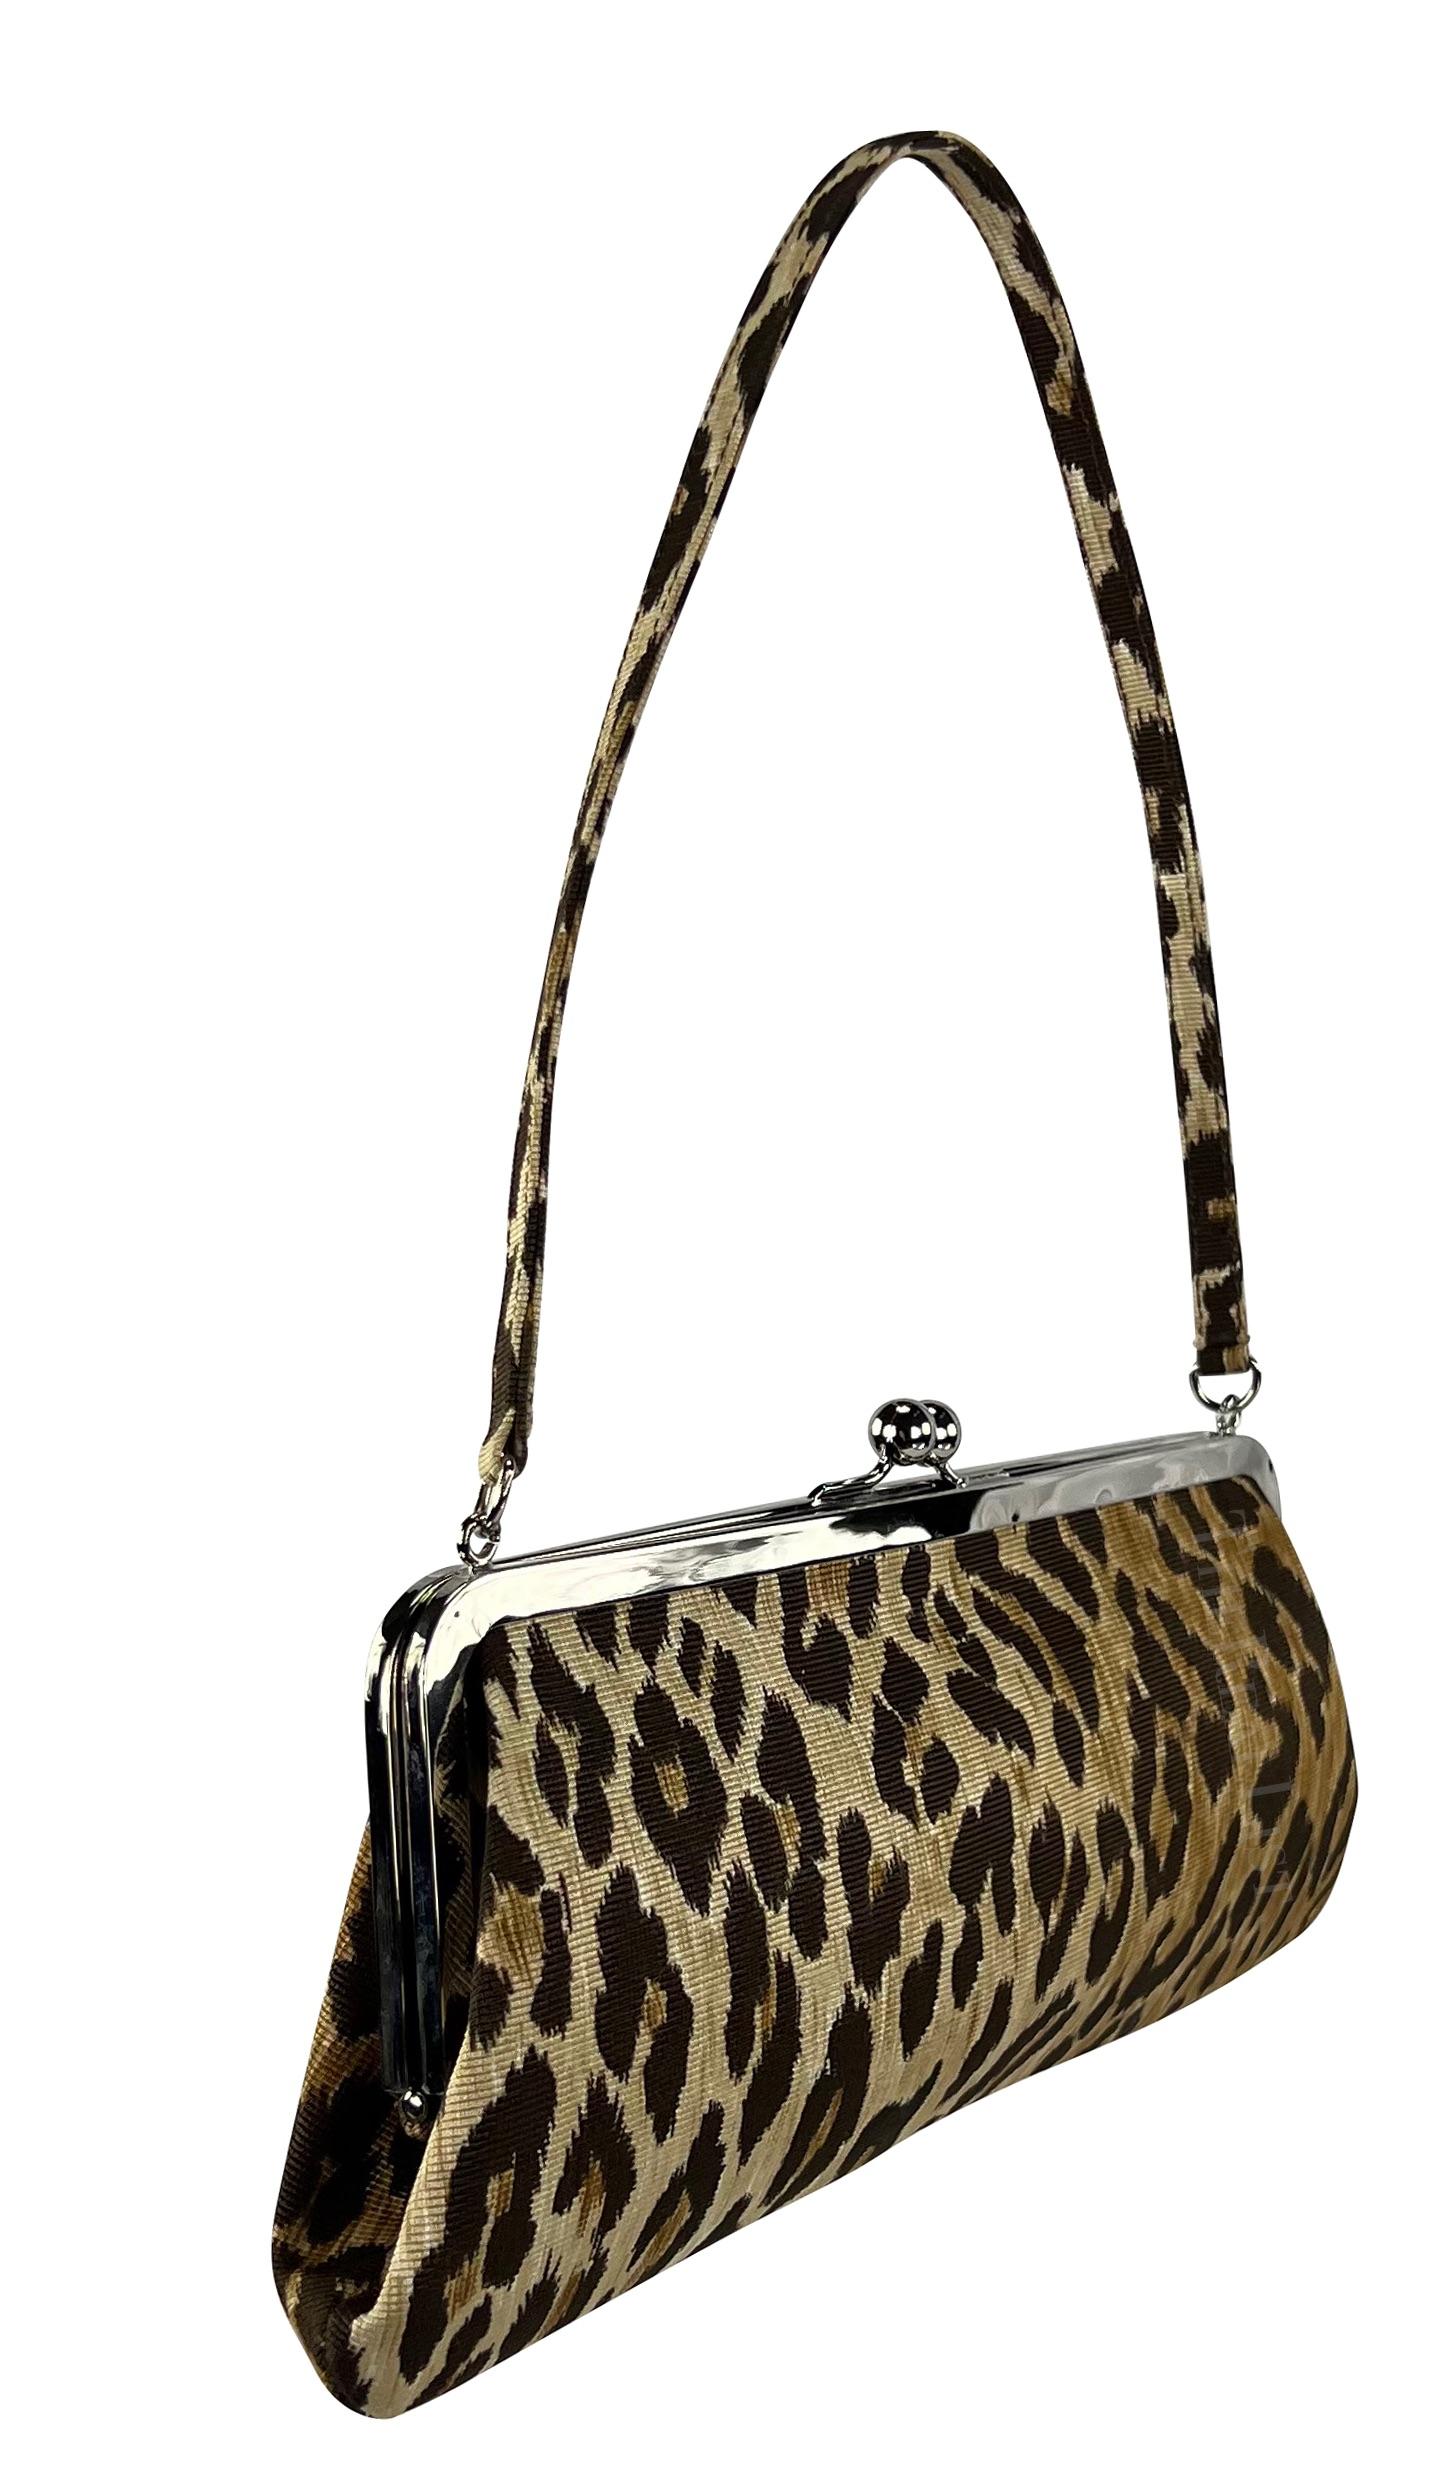 S/S 1997 Dolce & Gabbana Runway Cheetah Print Fabric Evening Shoulder Bag 2